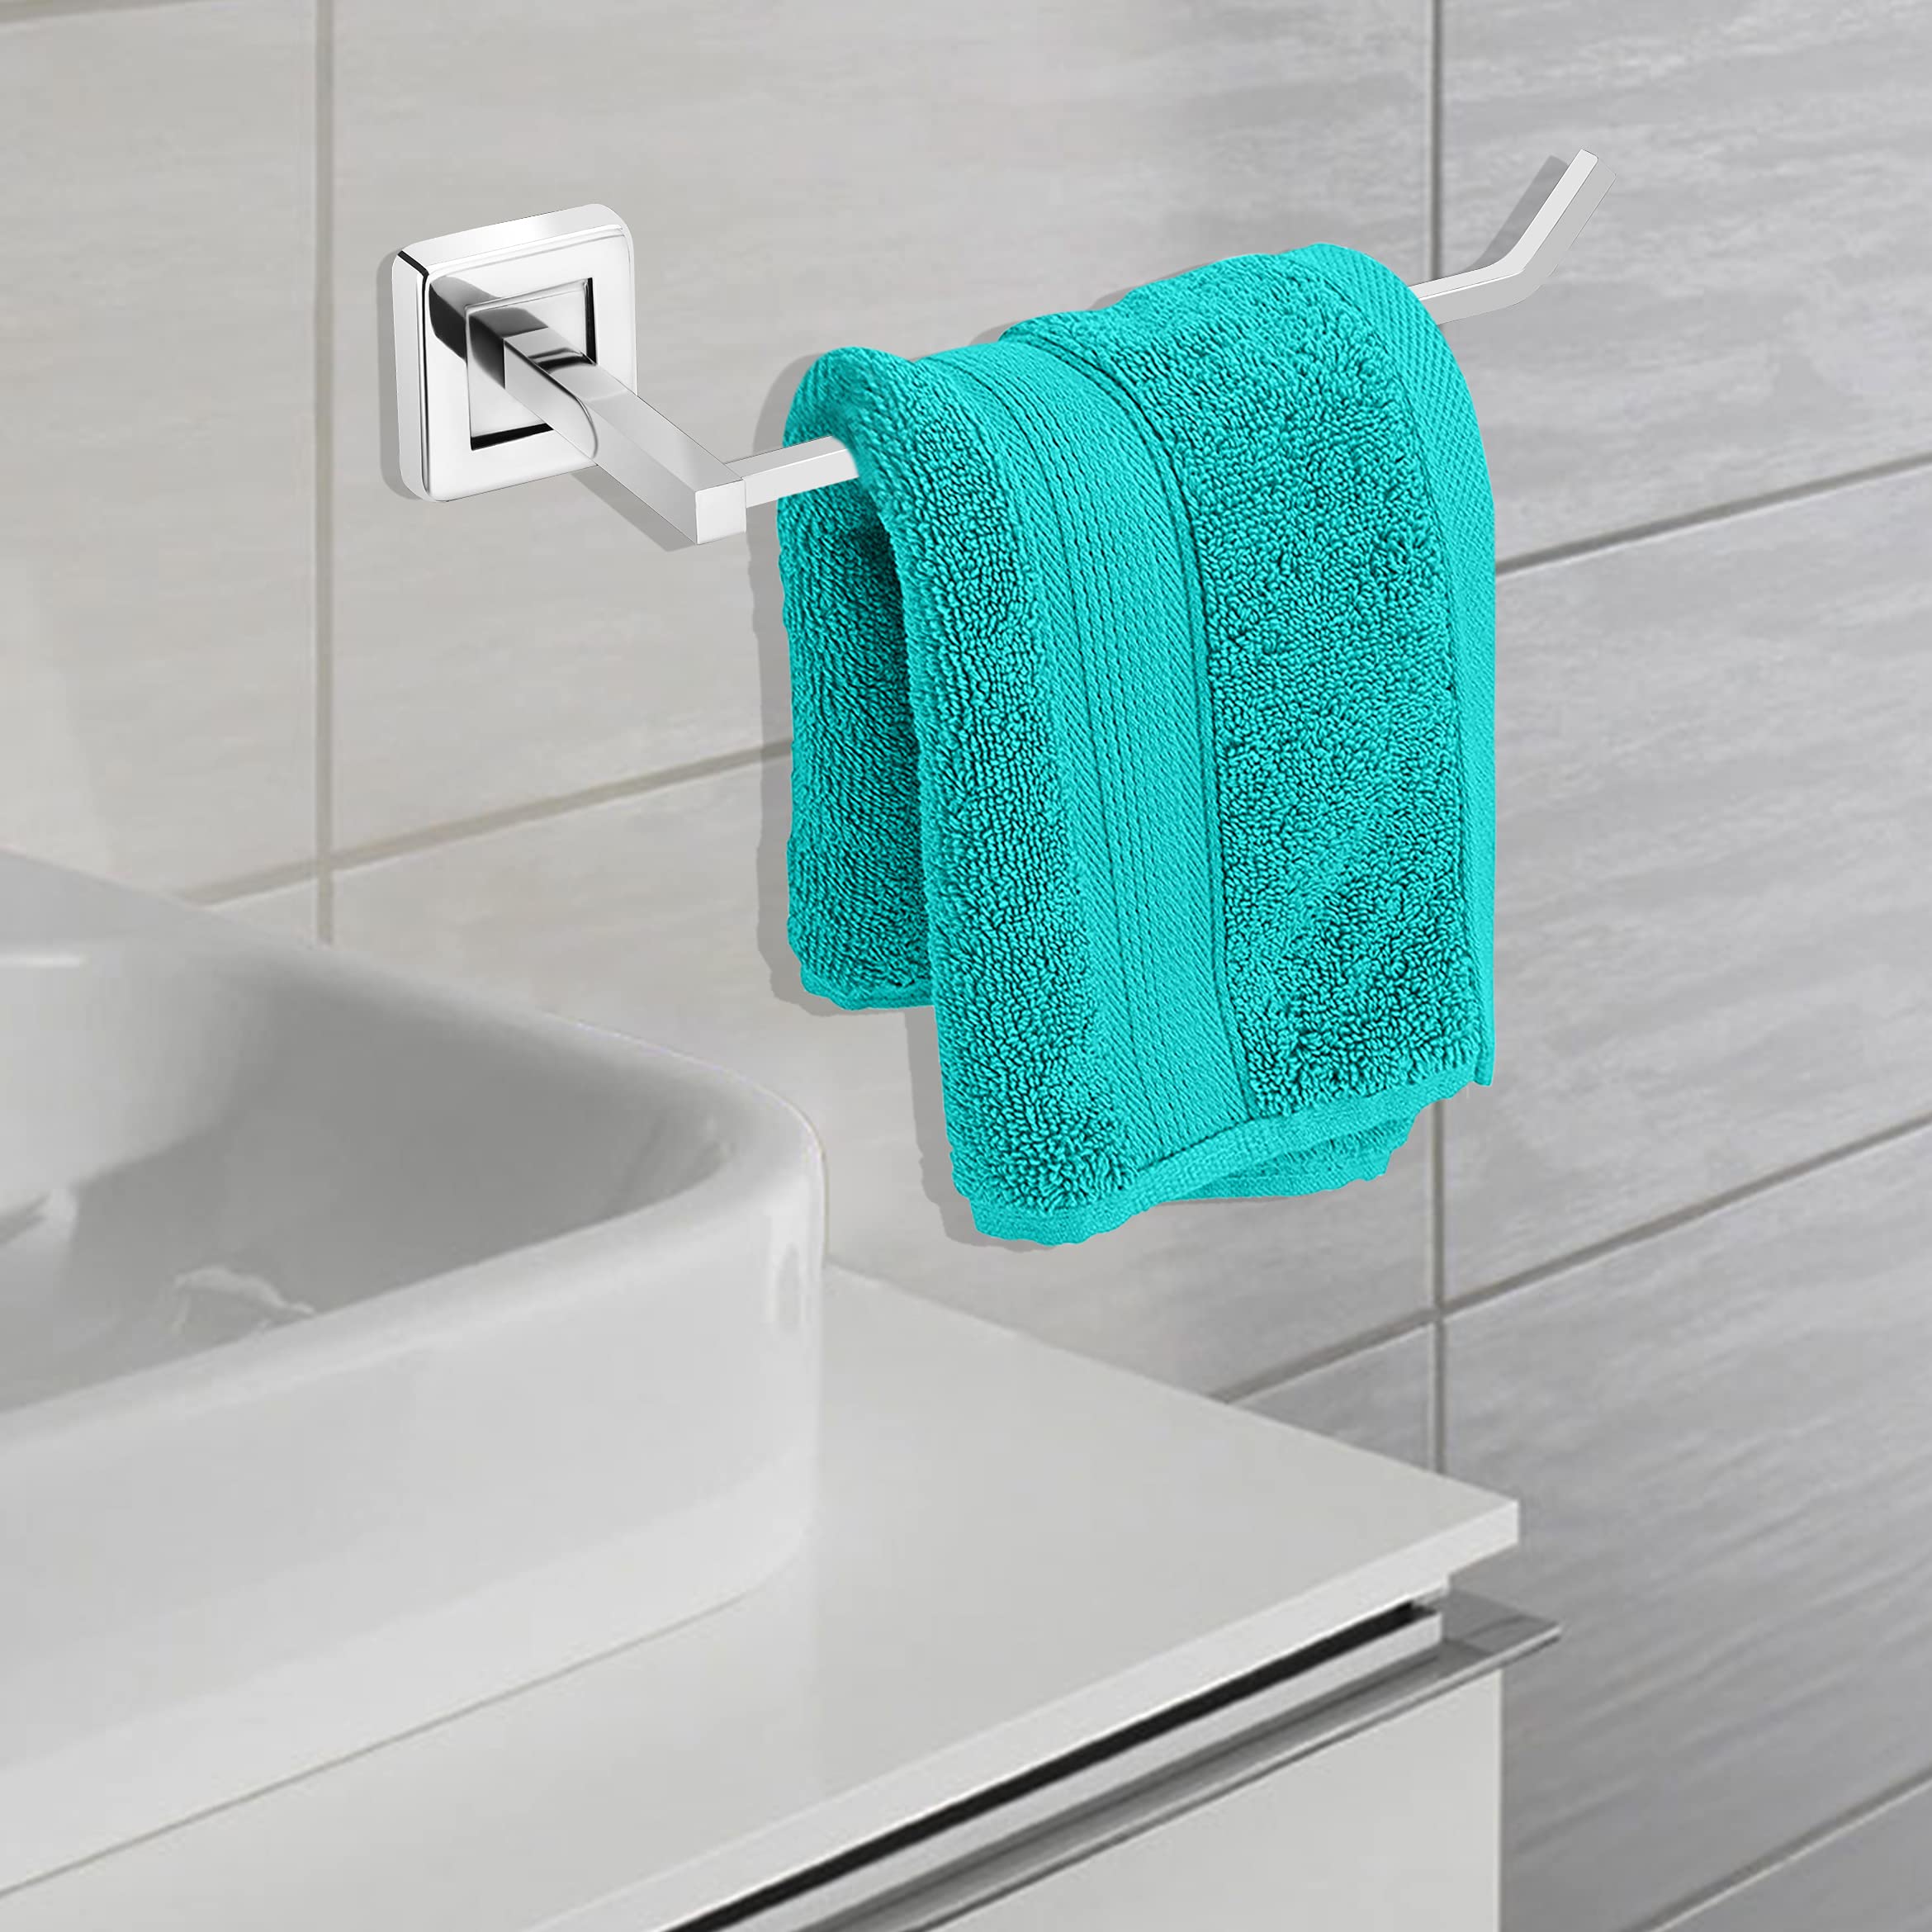 Plantex Stainless Steel Napkin Ring/Towel Ring/Holder/Towel Hanger/Bathroom Accessories (Chrome) - Pack of 1